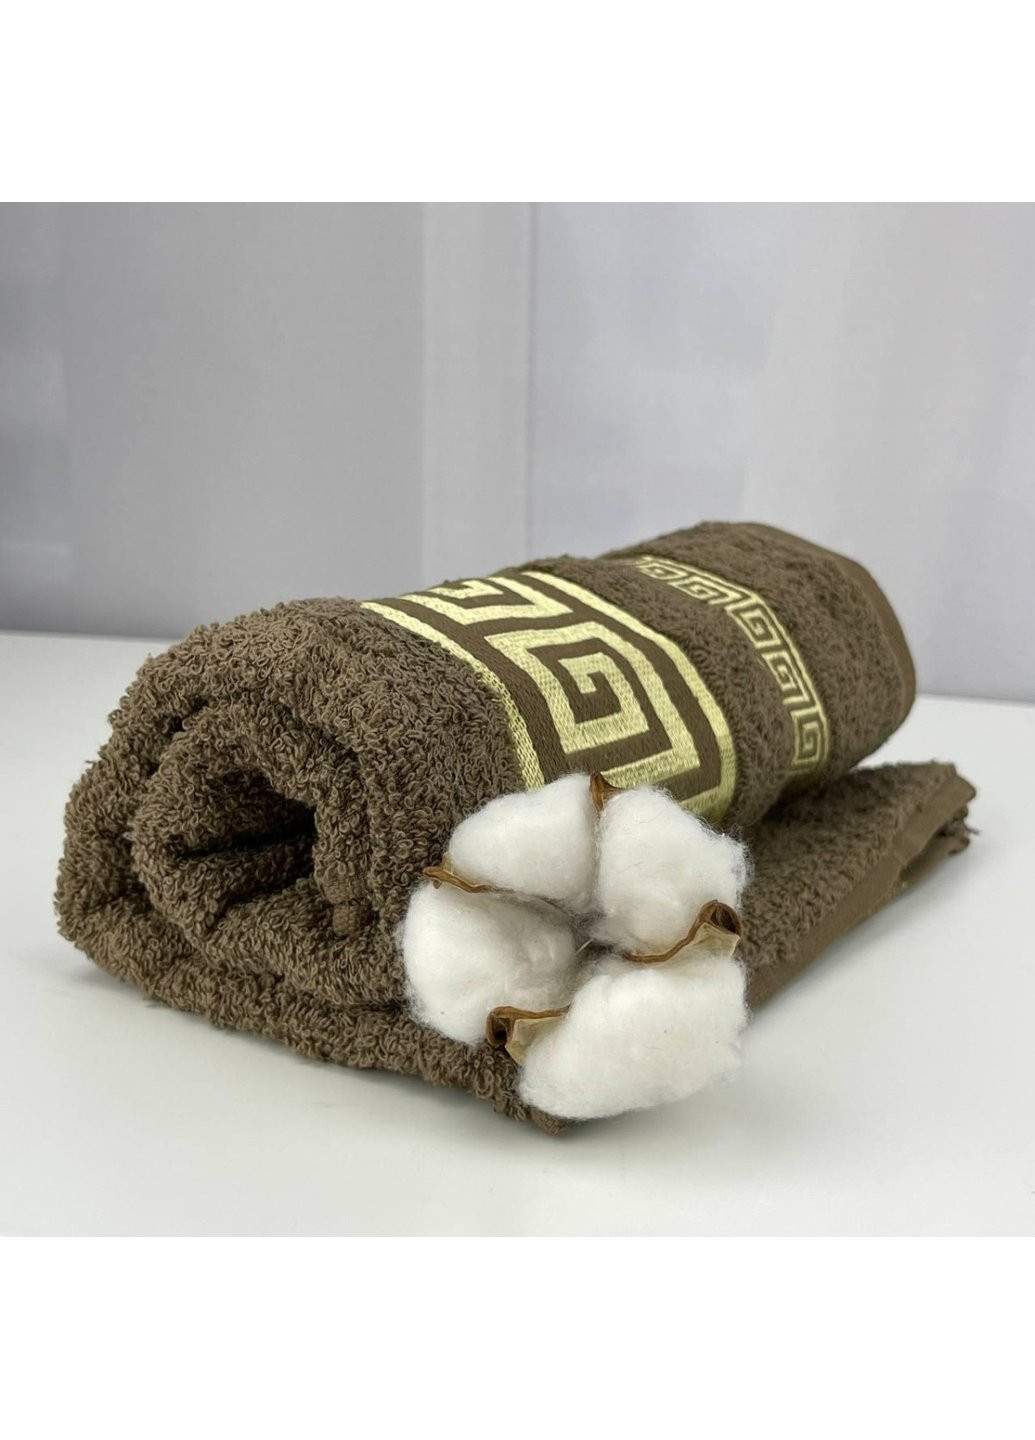 Power полотенце для лица махровое febo vip cotton grek турция 6387 коричневое 50х90 см комбинированный производство - Турция